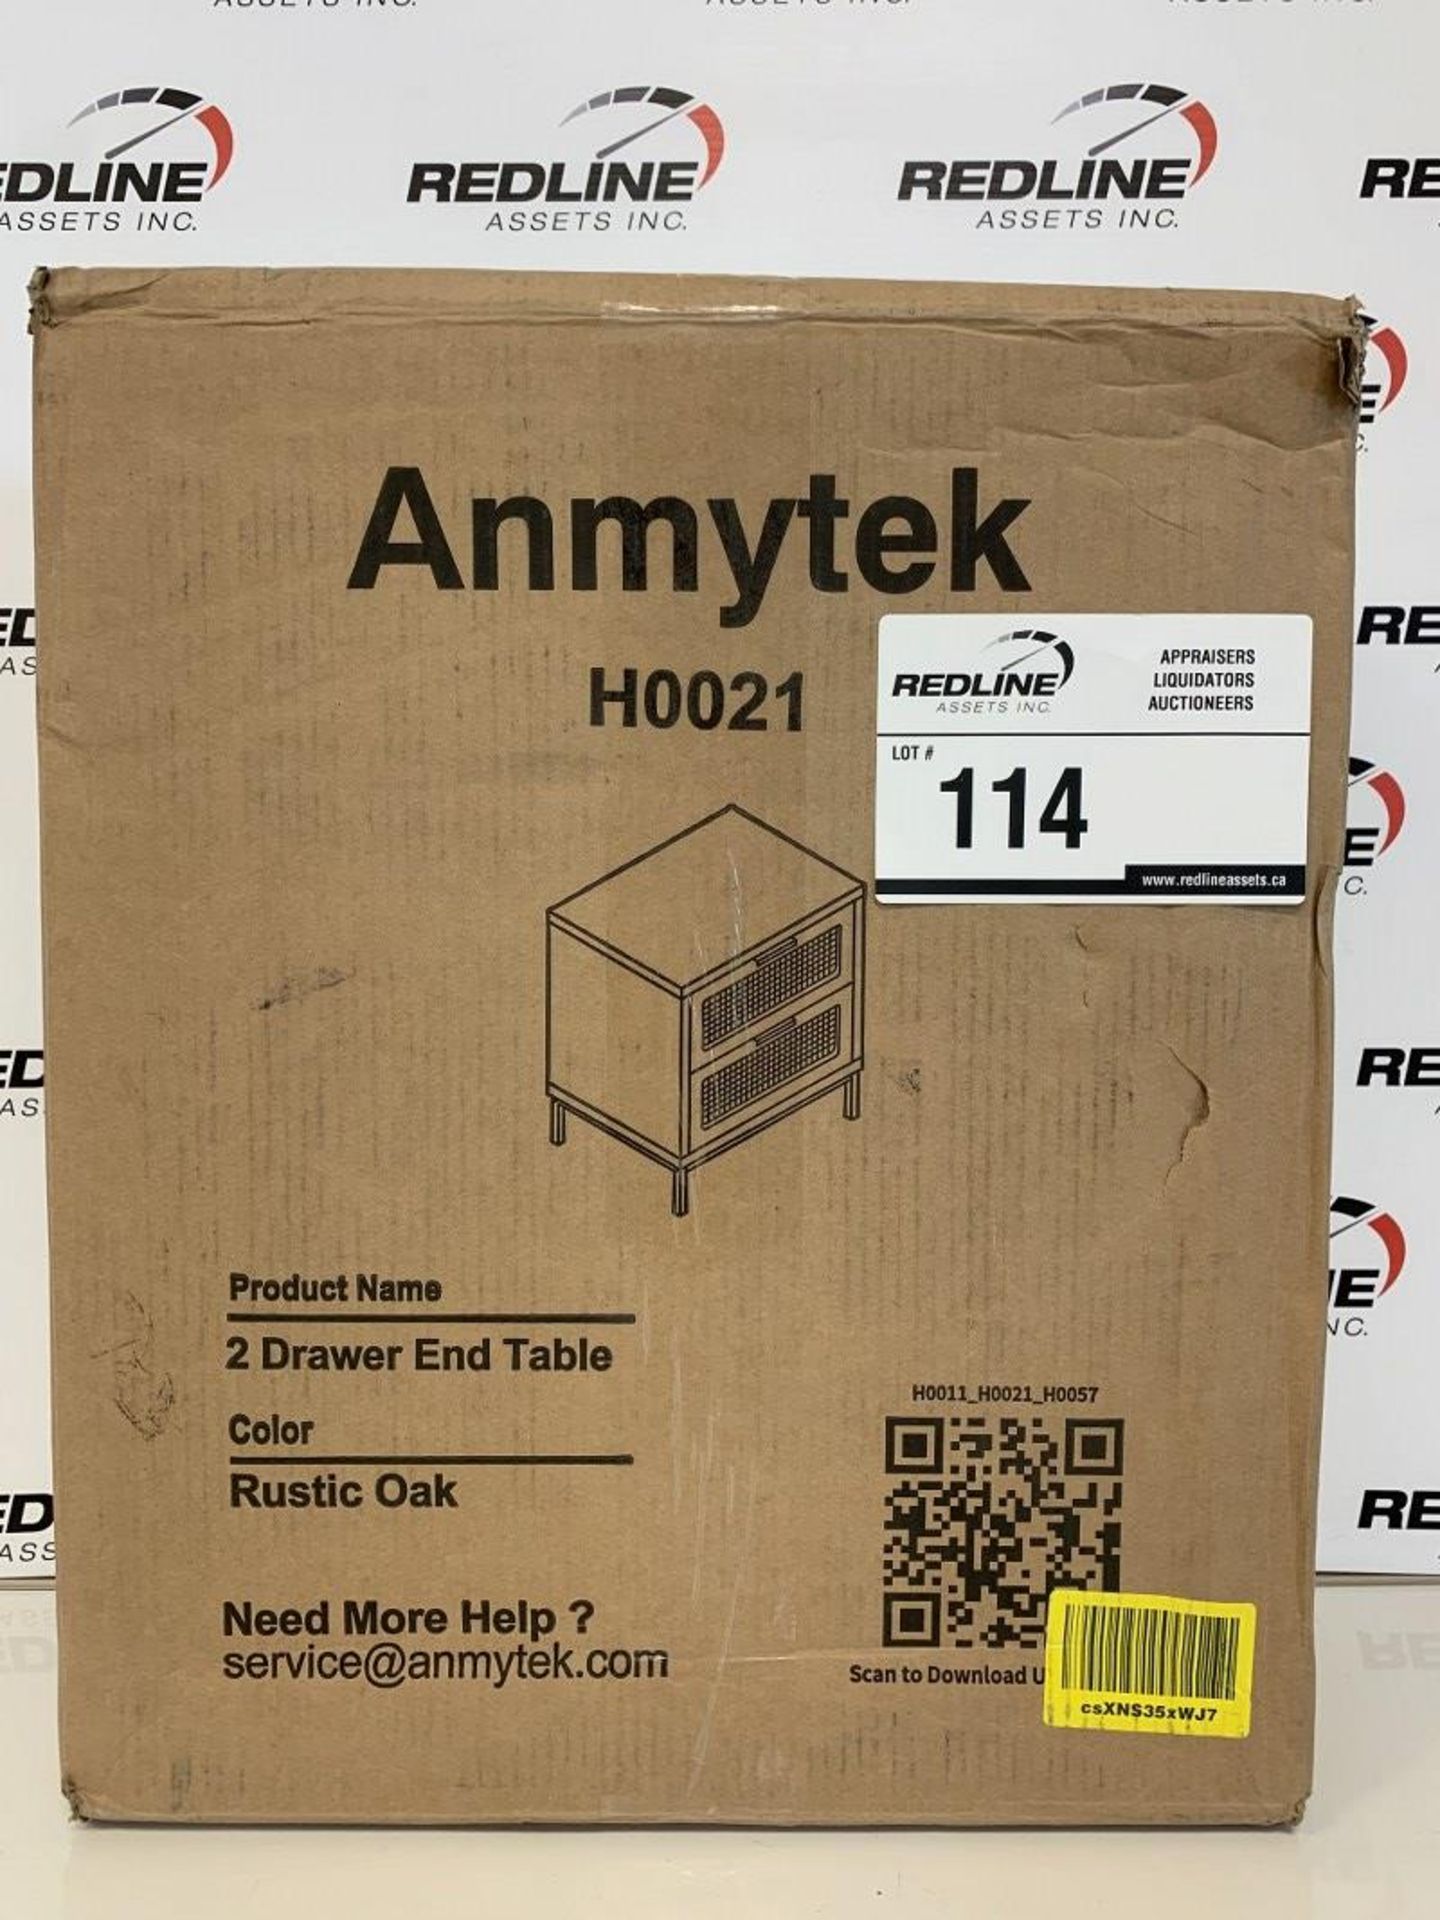 Anmytek - 2 Drawer End Table - Rustic Oak - Image 2 of 2